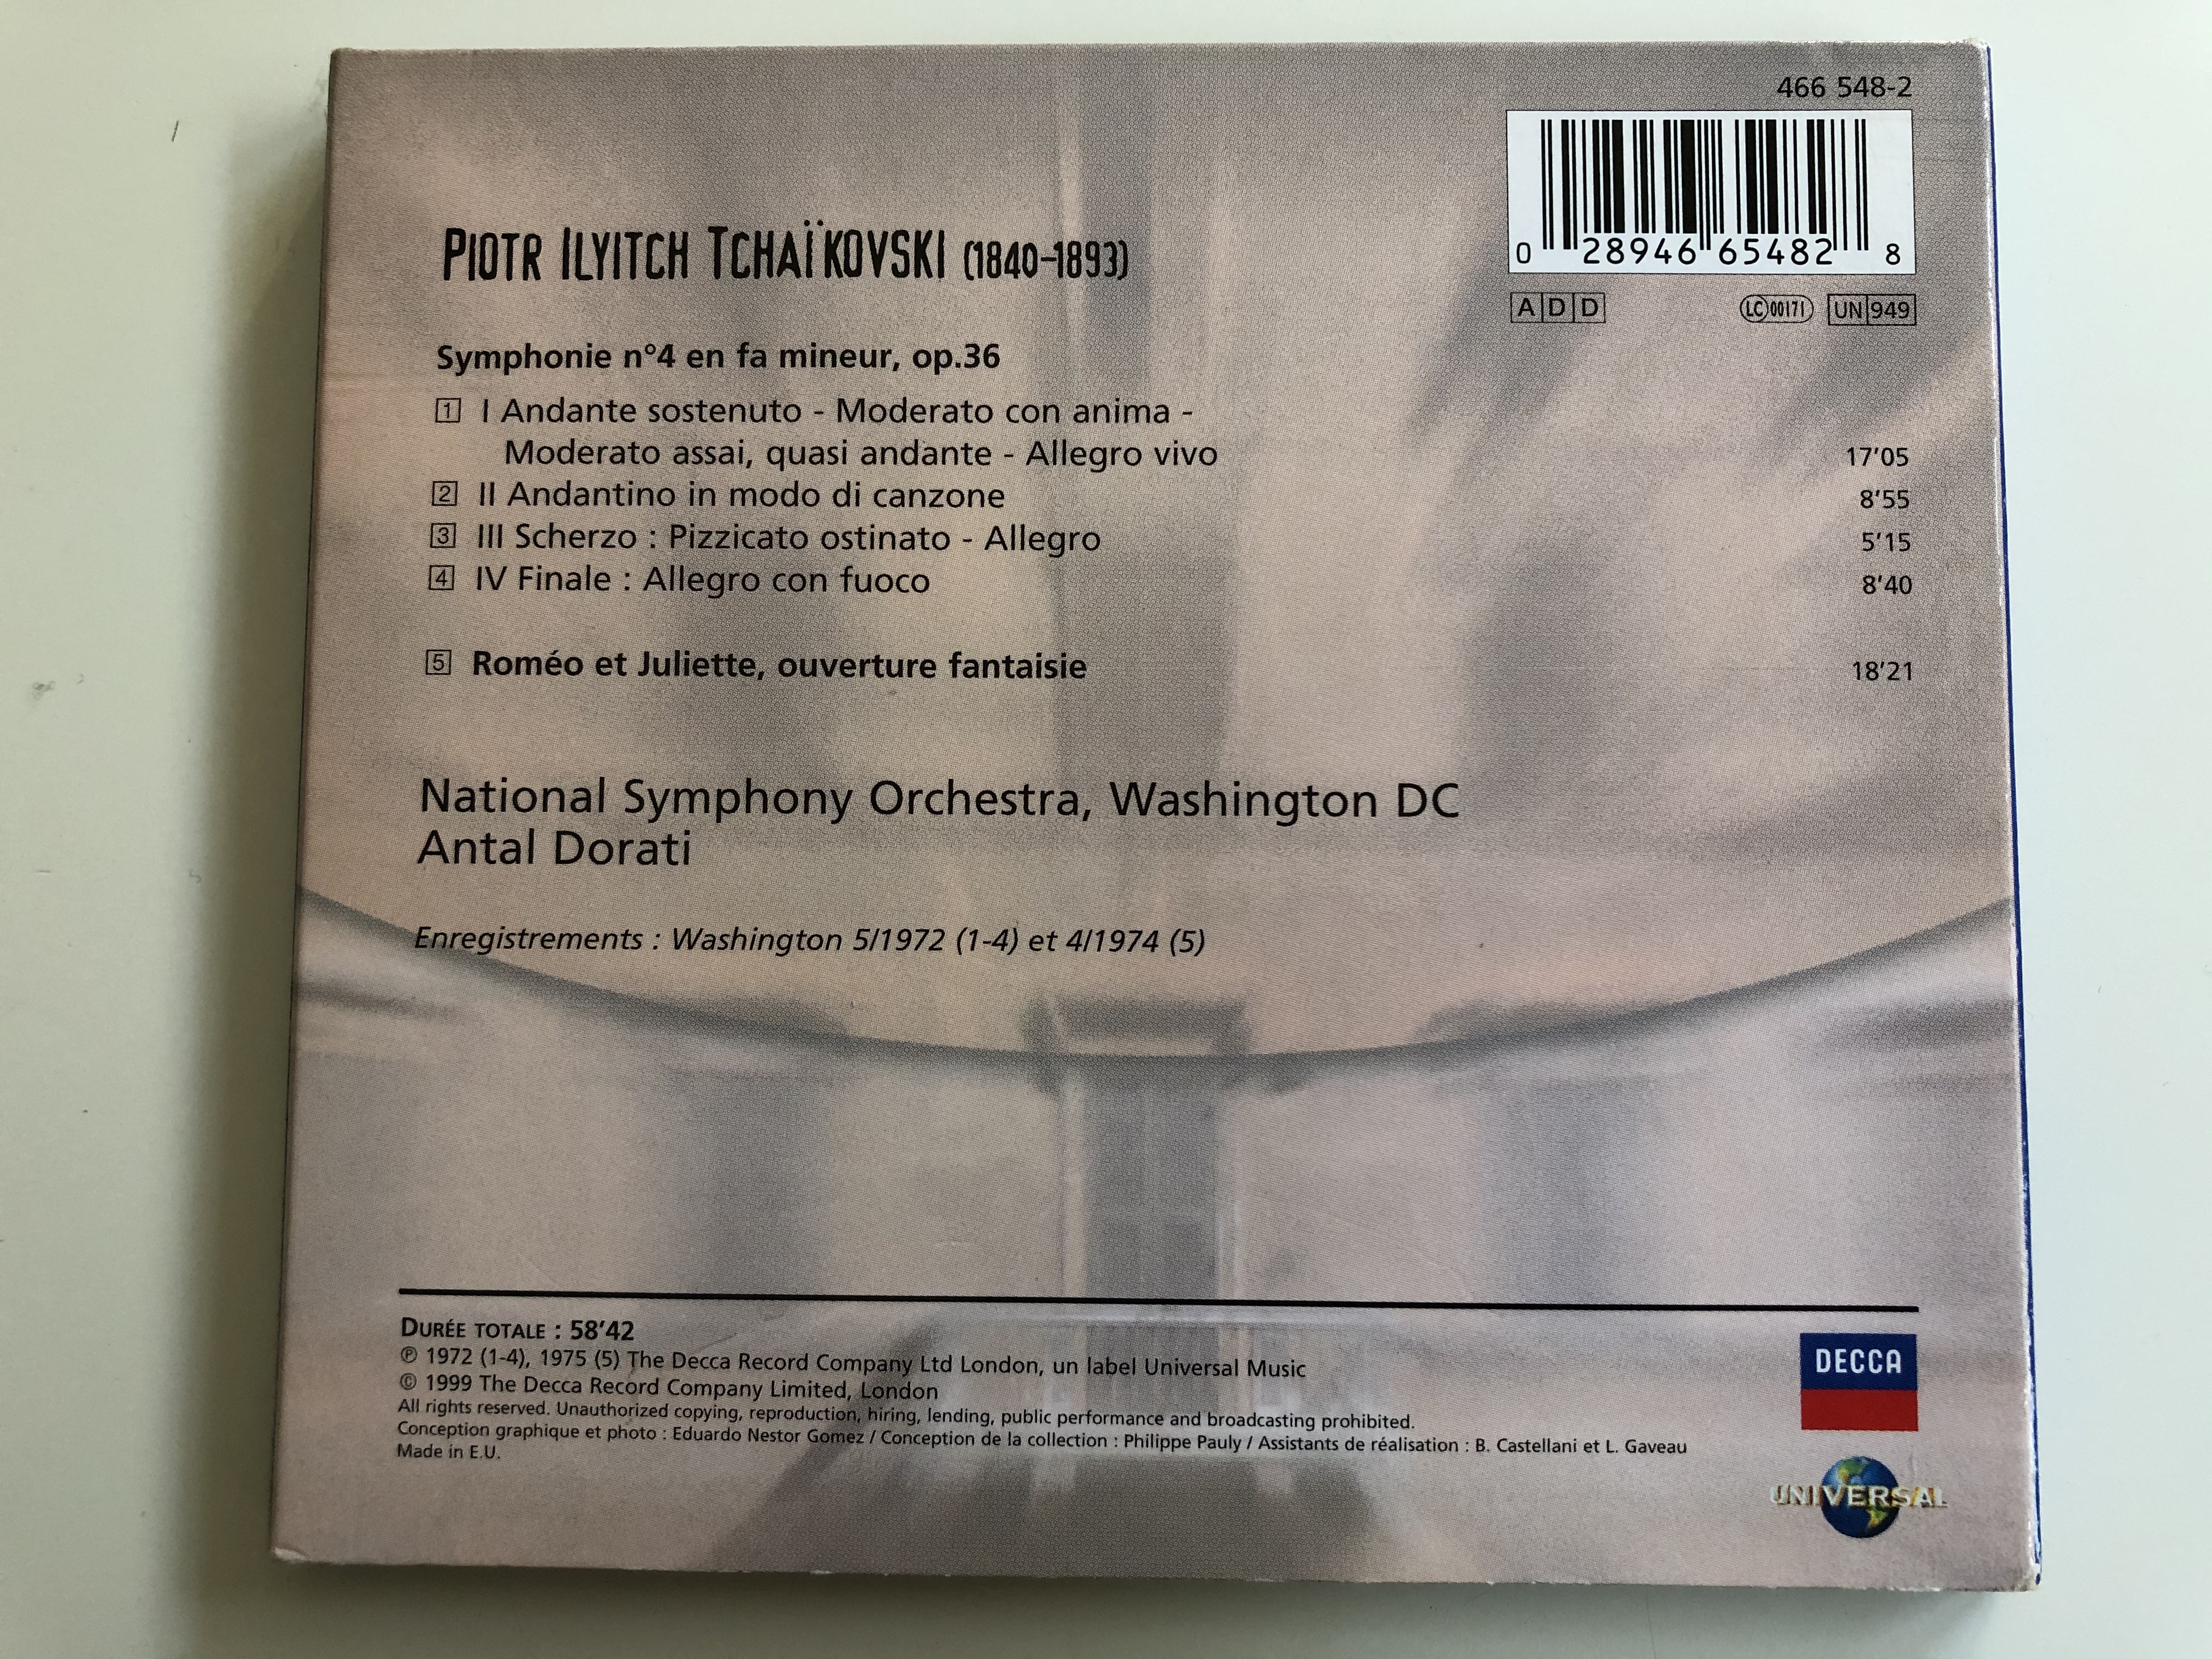 tchaikovsky-symphony-n-4-rom-o-et-juliette-antal-dorati-la-collection-classique-decca-audio-cd-stereo-466-548-2-4-.jpg